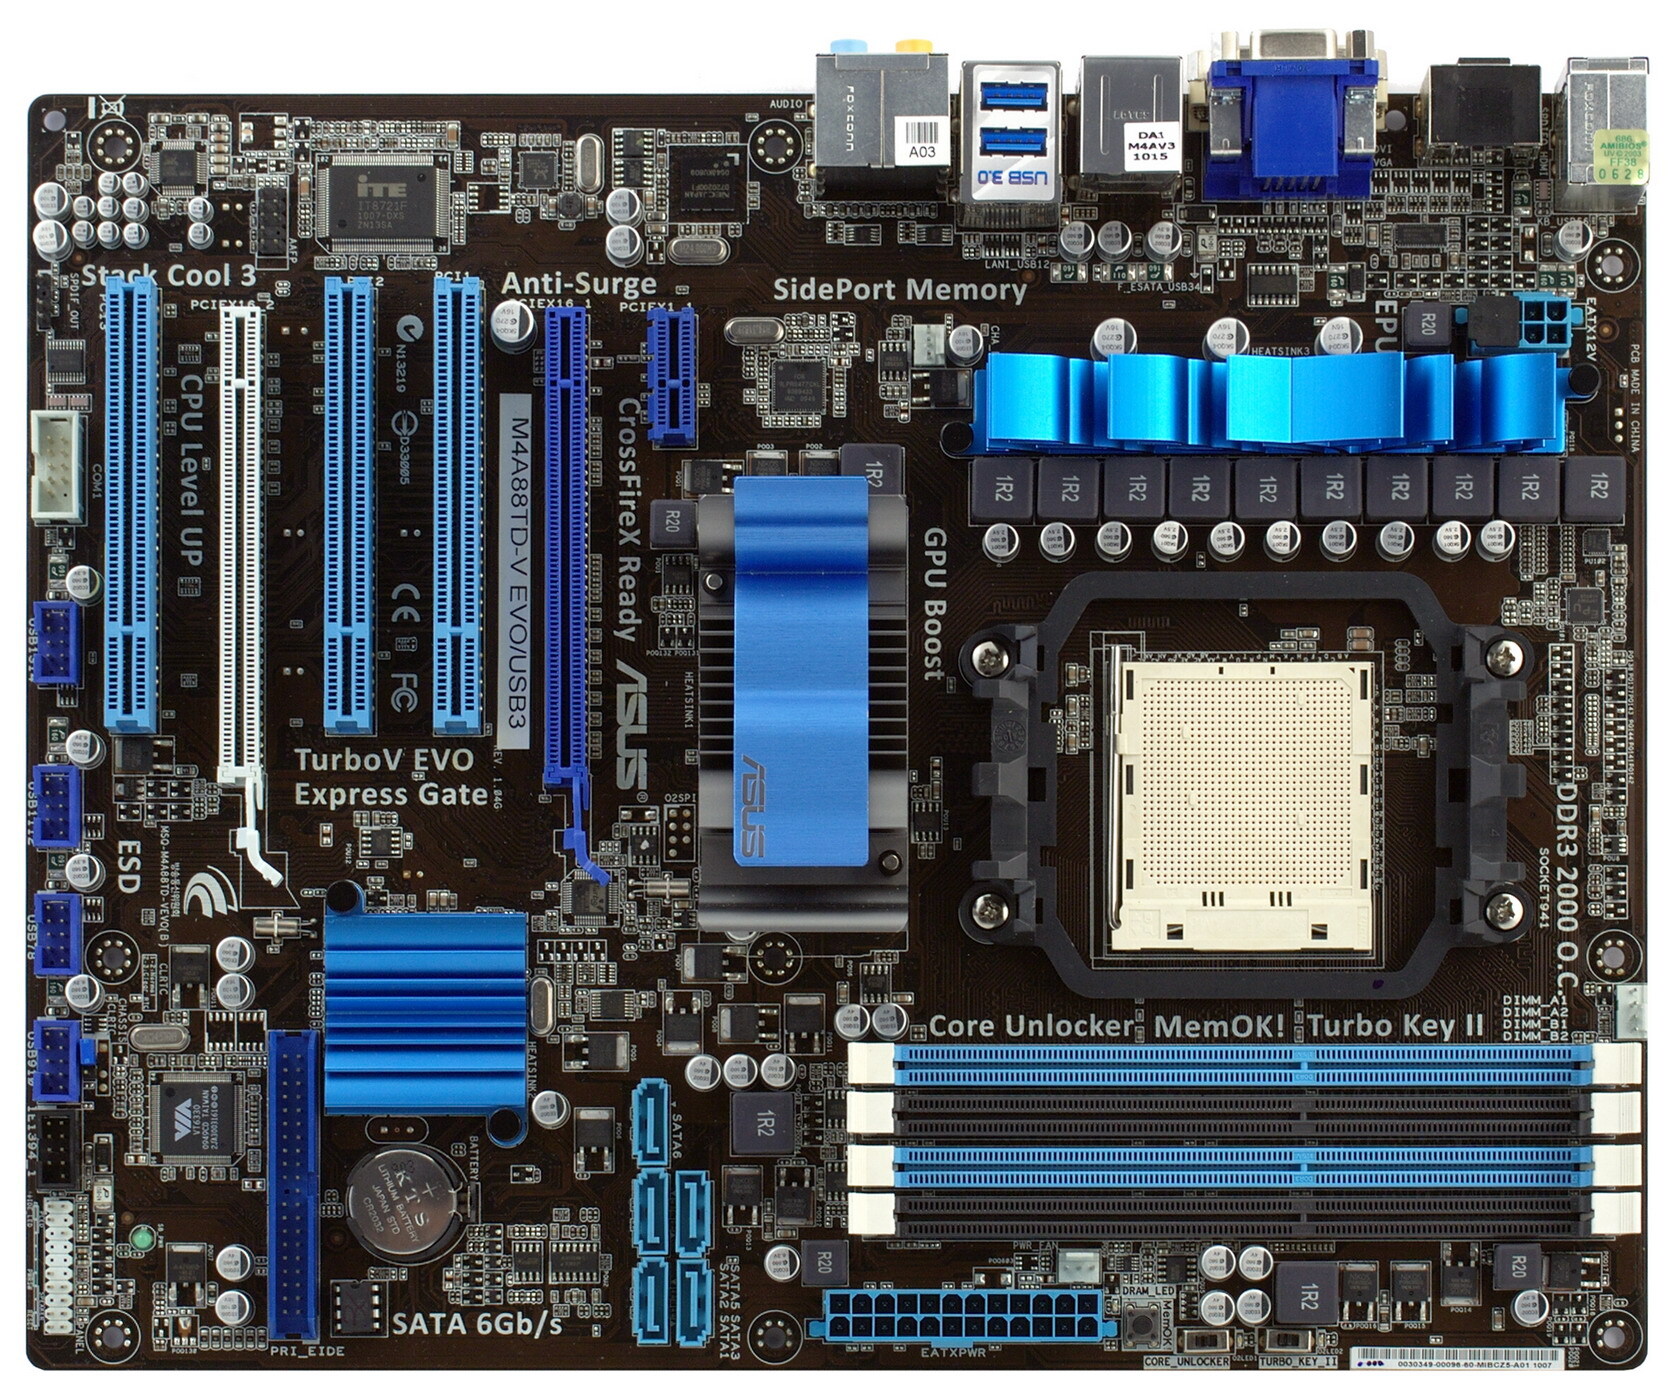 Bo mạch chủ (Mainboard) Asus M4A88TD-V EVO/USB3 - Socket AM3, AMD 880G/SB850, 4 x DIMM, Max 16GB, DDR3